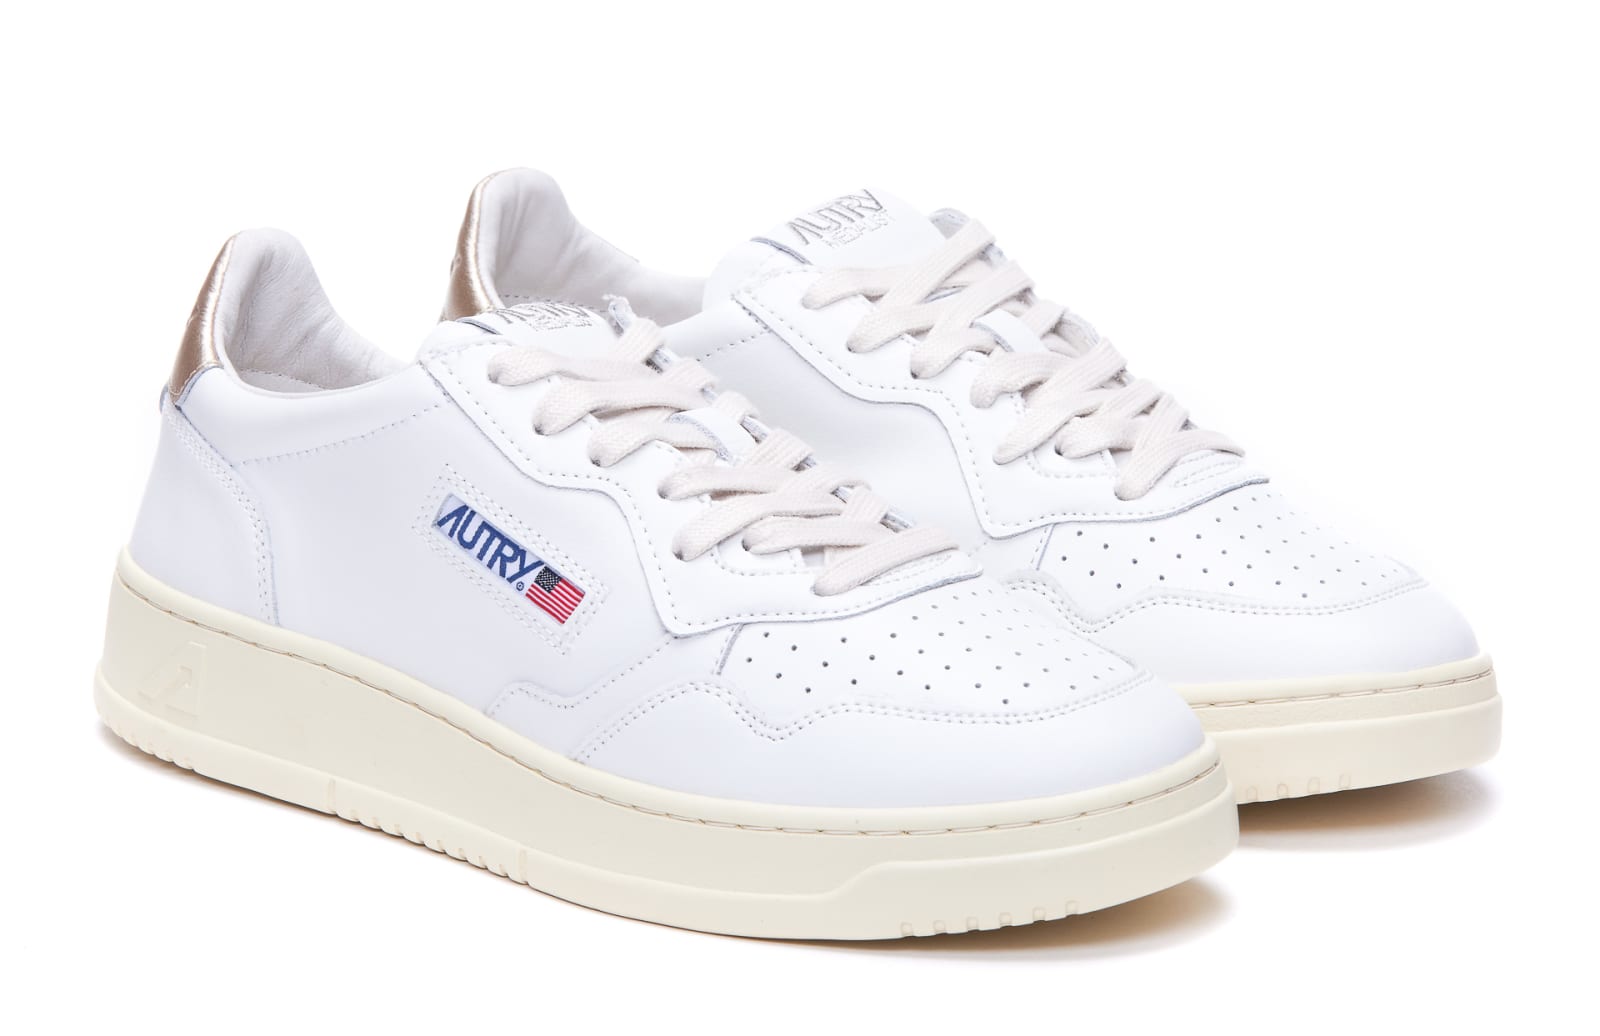 Shop Autry Medialist Low Sneakers In White